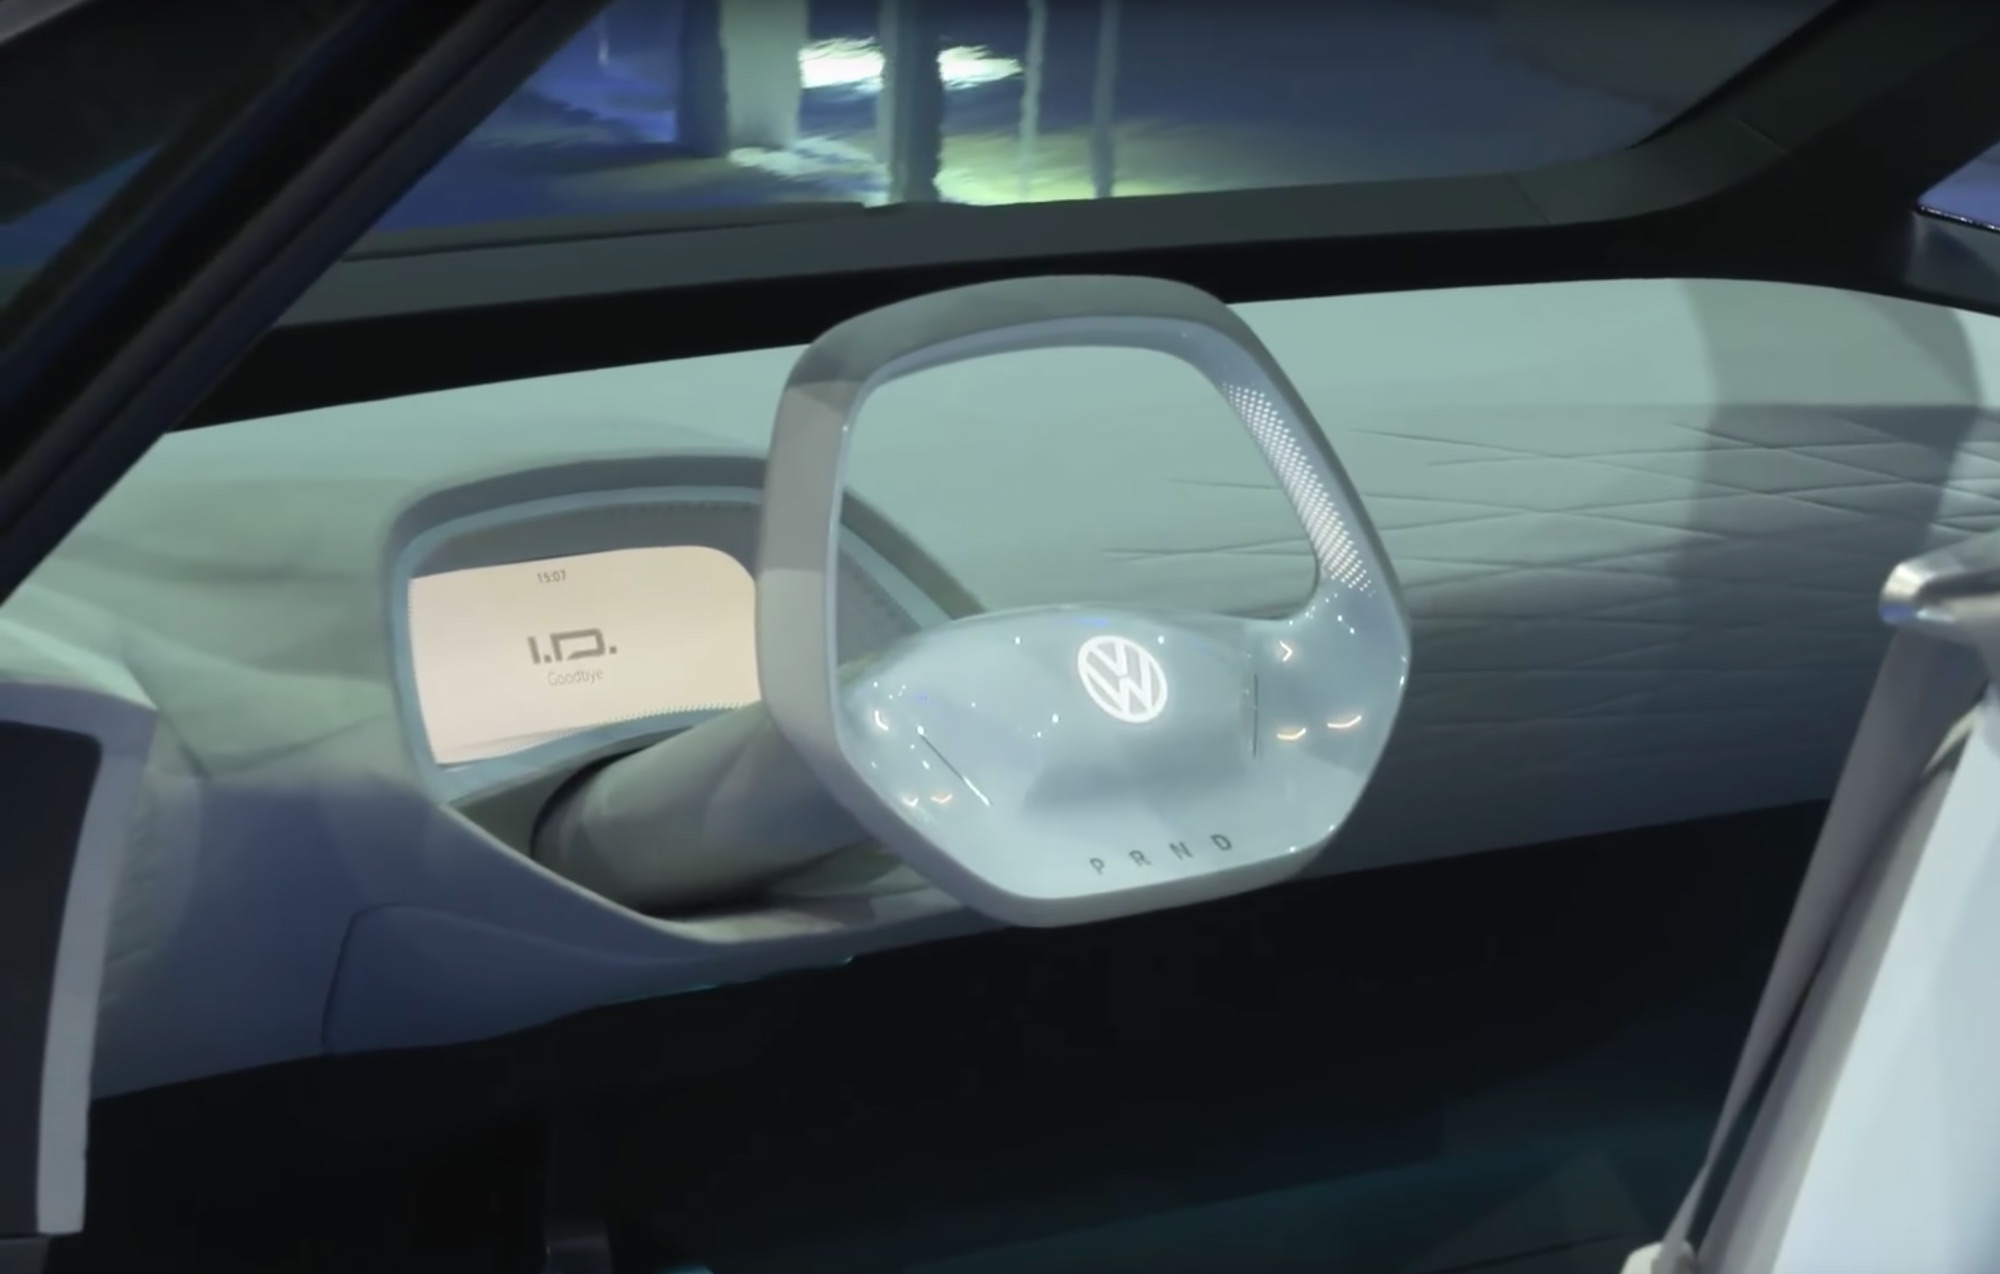 Volkswagen concept car I.D. dashboard